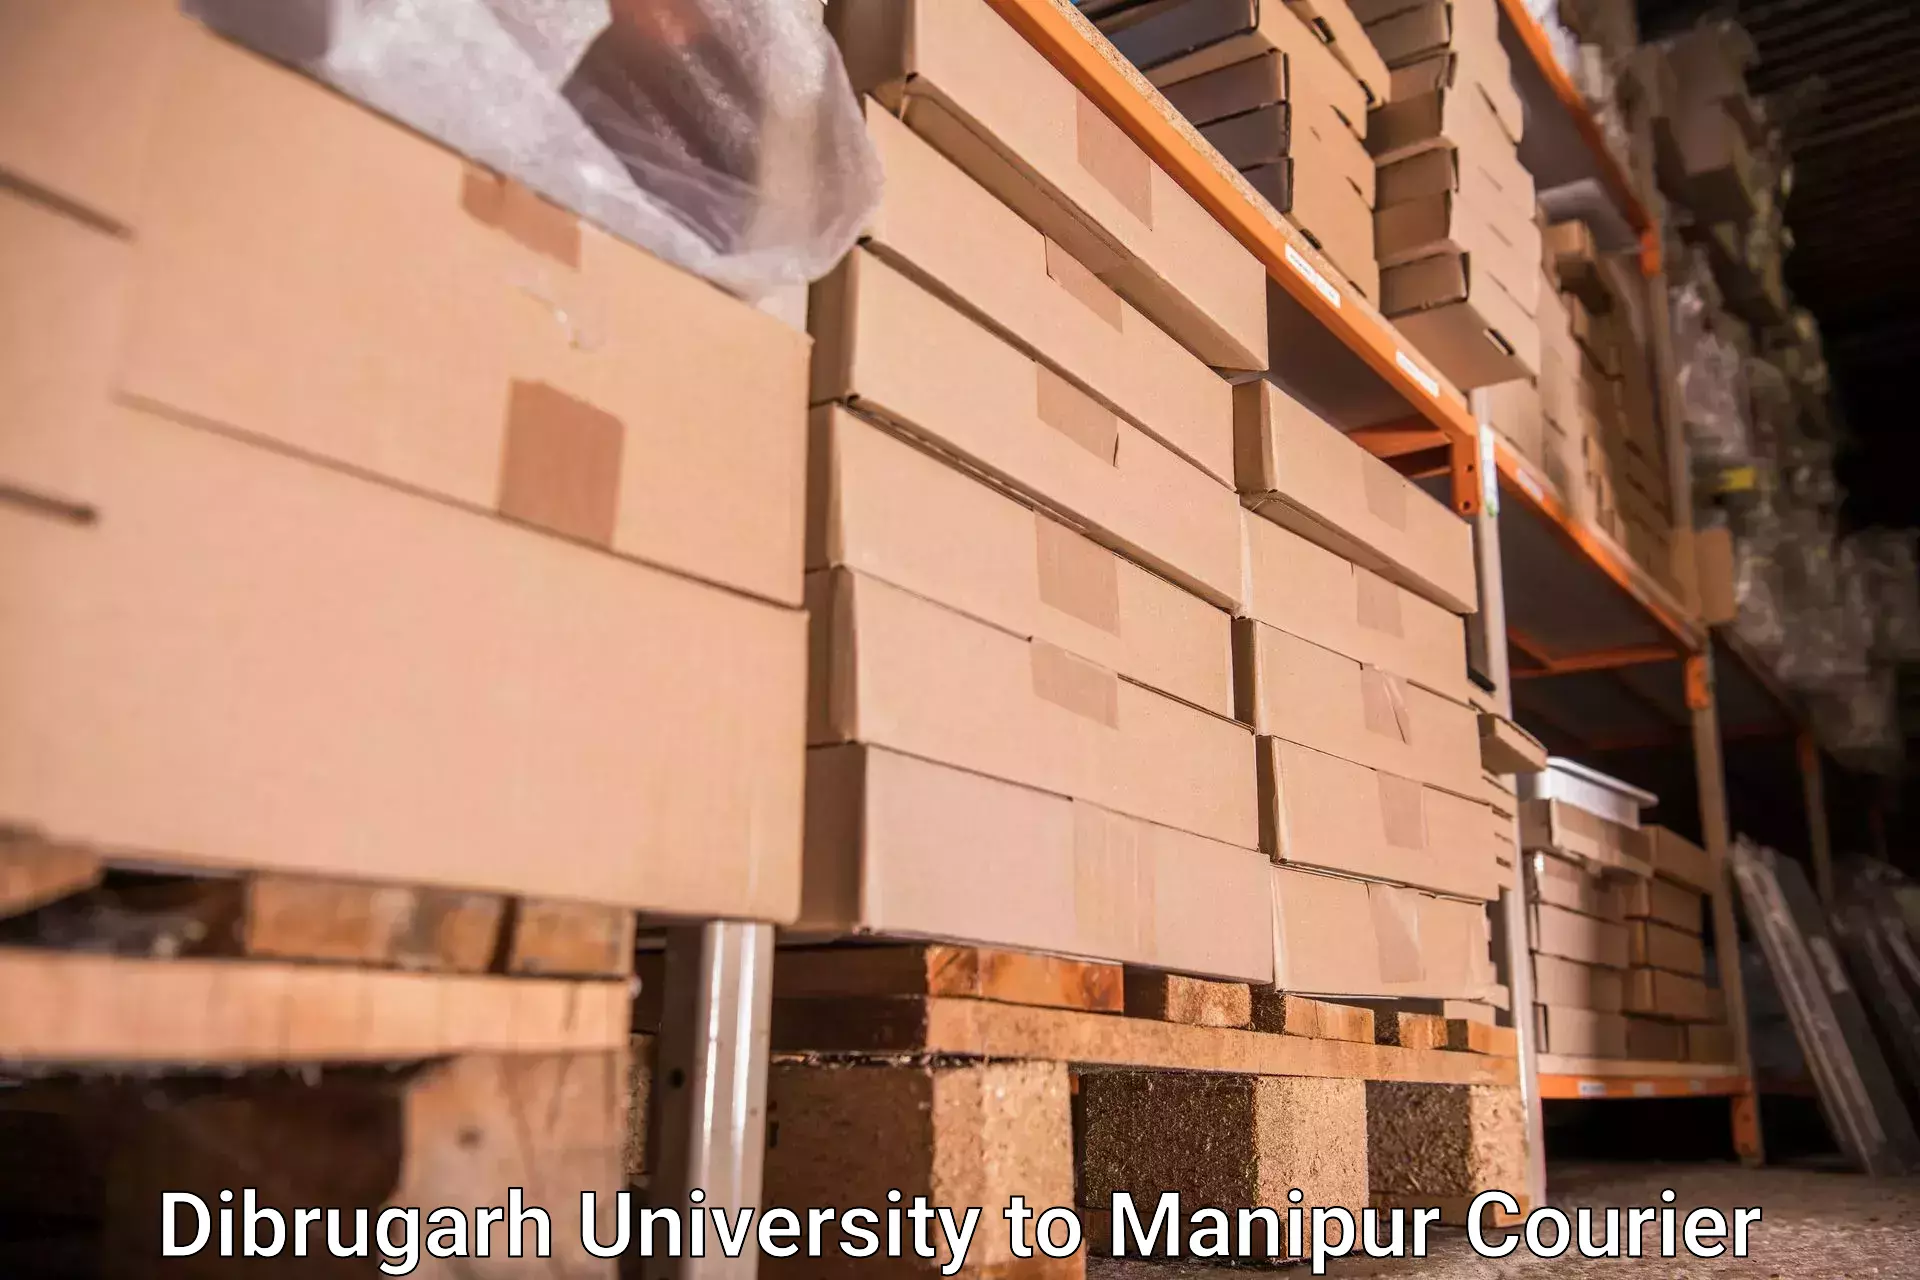 Baggage shipping service Dibrugarh University to Manipur